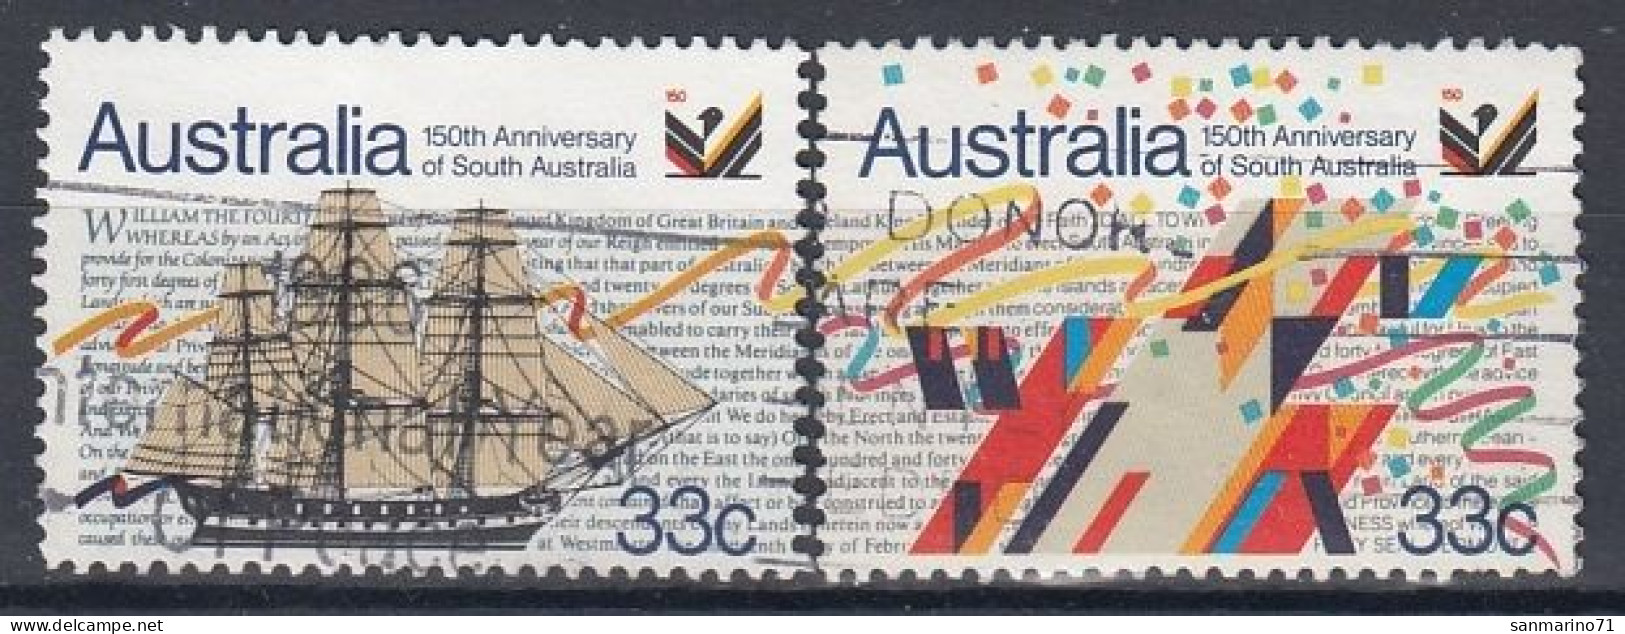 AUSTRALIA 958-959,used,falc Hinged - Usati